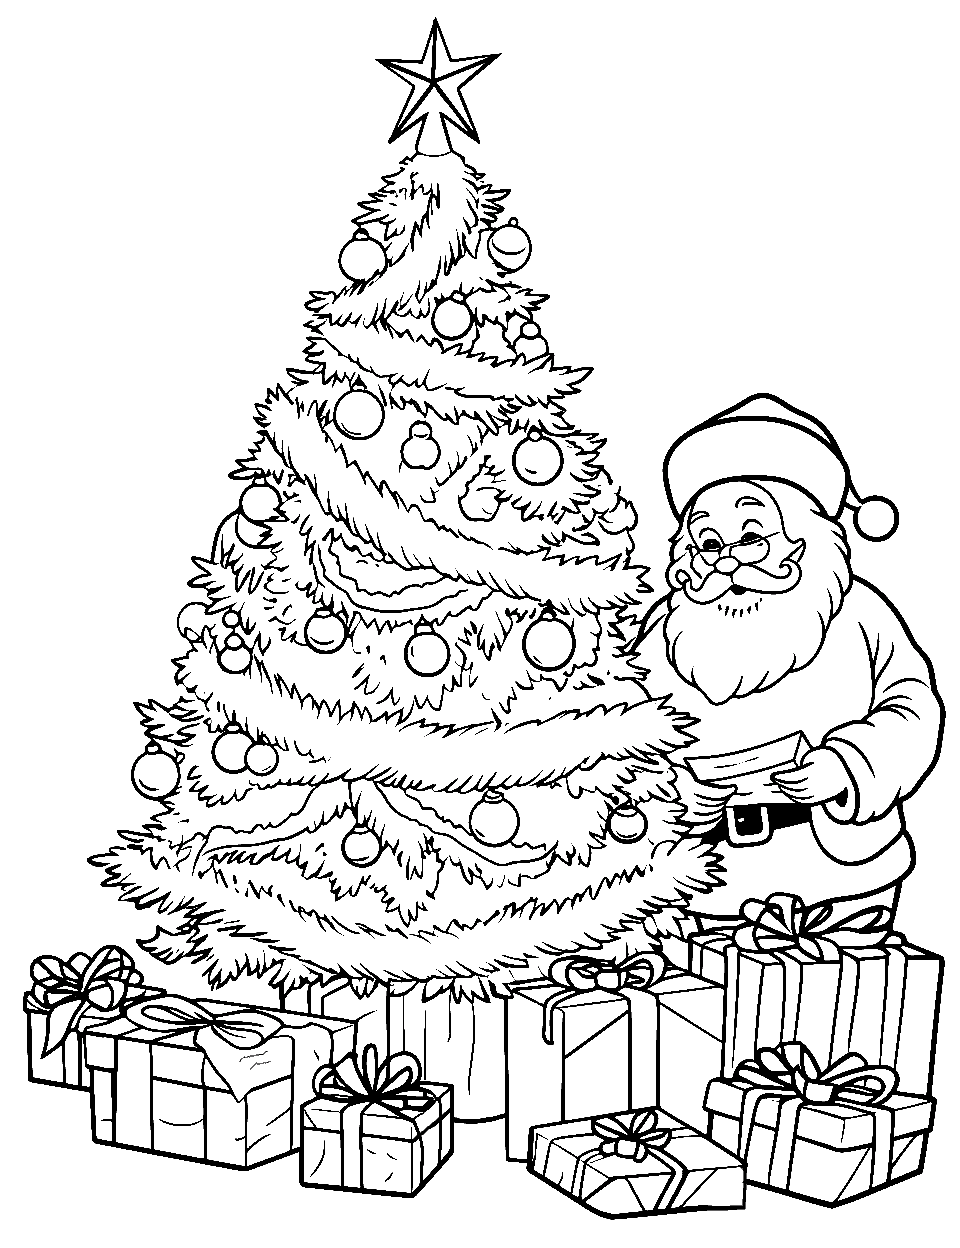 Christmas beautiful Christmas tree holiday gifts cartoon illustration  isolated image coloring page Stock Illustration | Adobe Stock